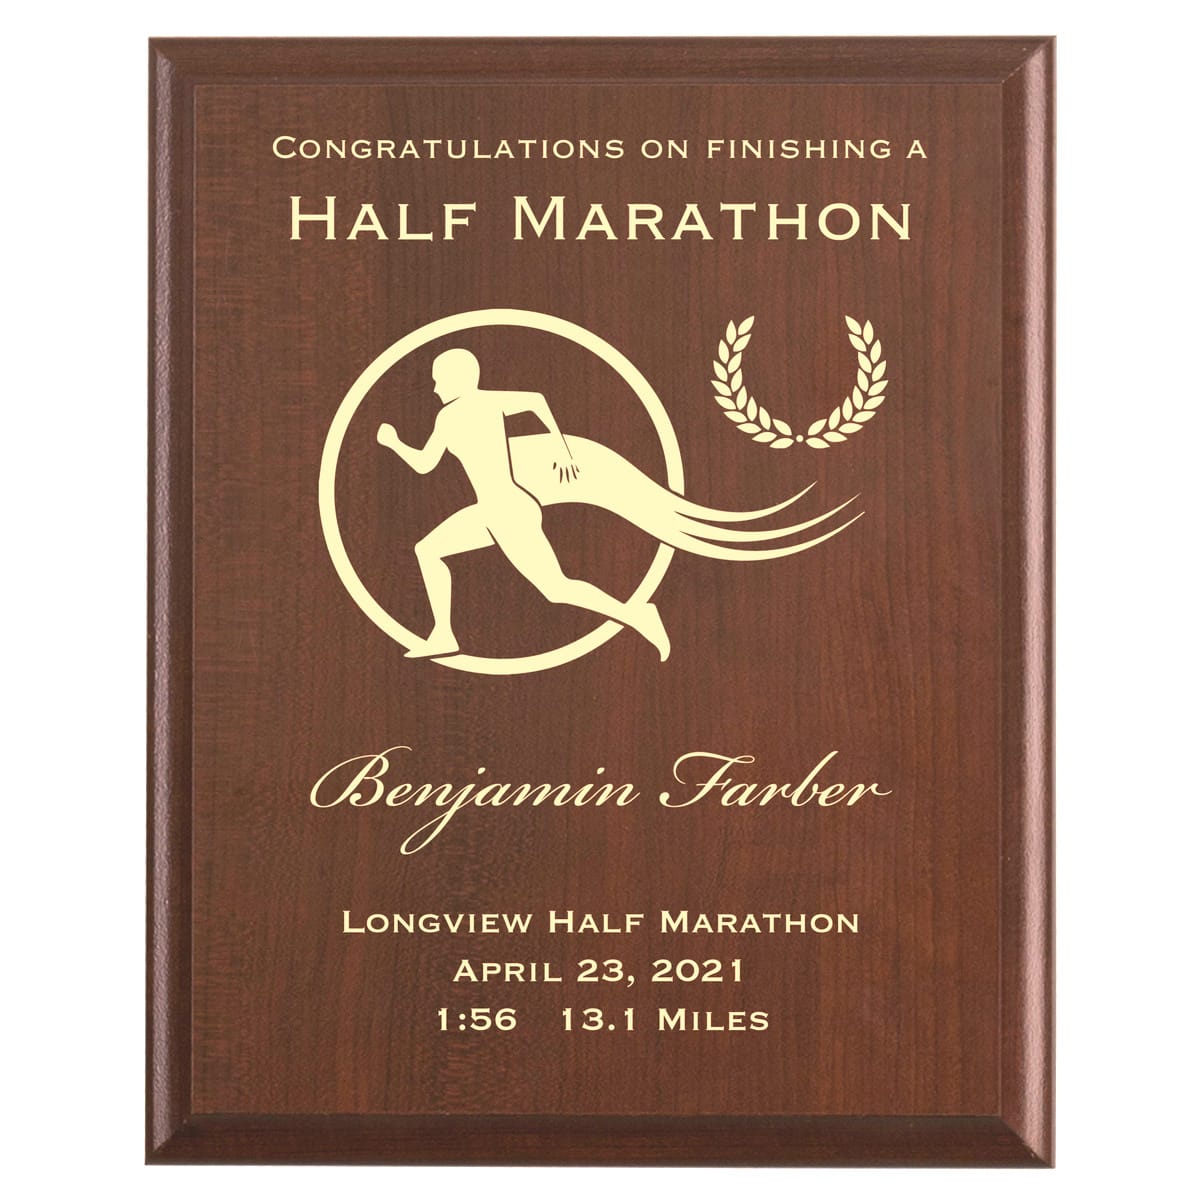 Plaque photo: Half Marathon Finisher Award design with free personalization. Wood style finish with customized text.